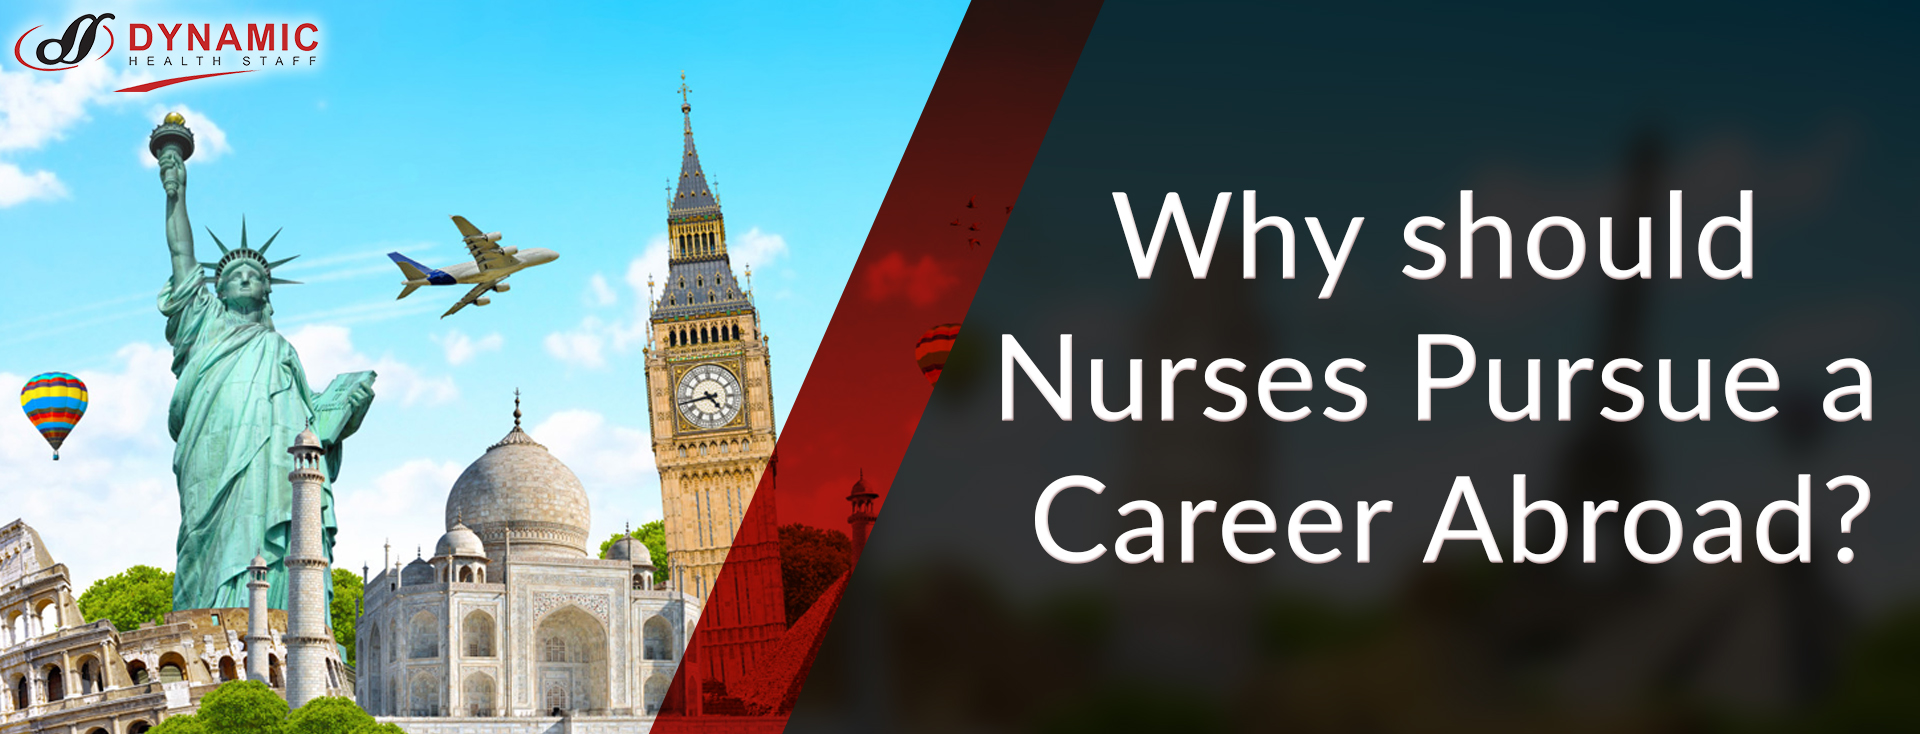 Why should Nurses Pursue a Career Abroad